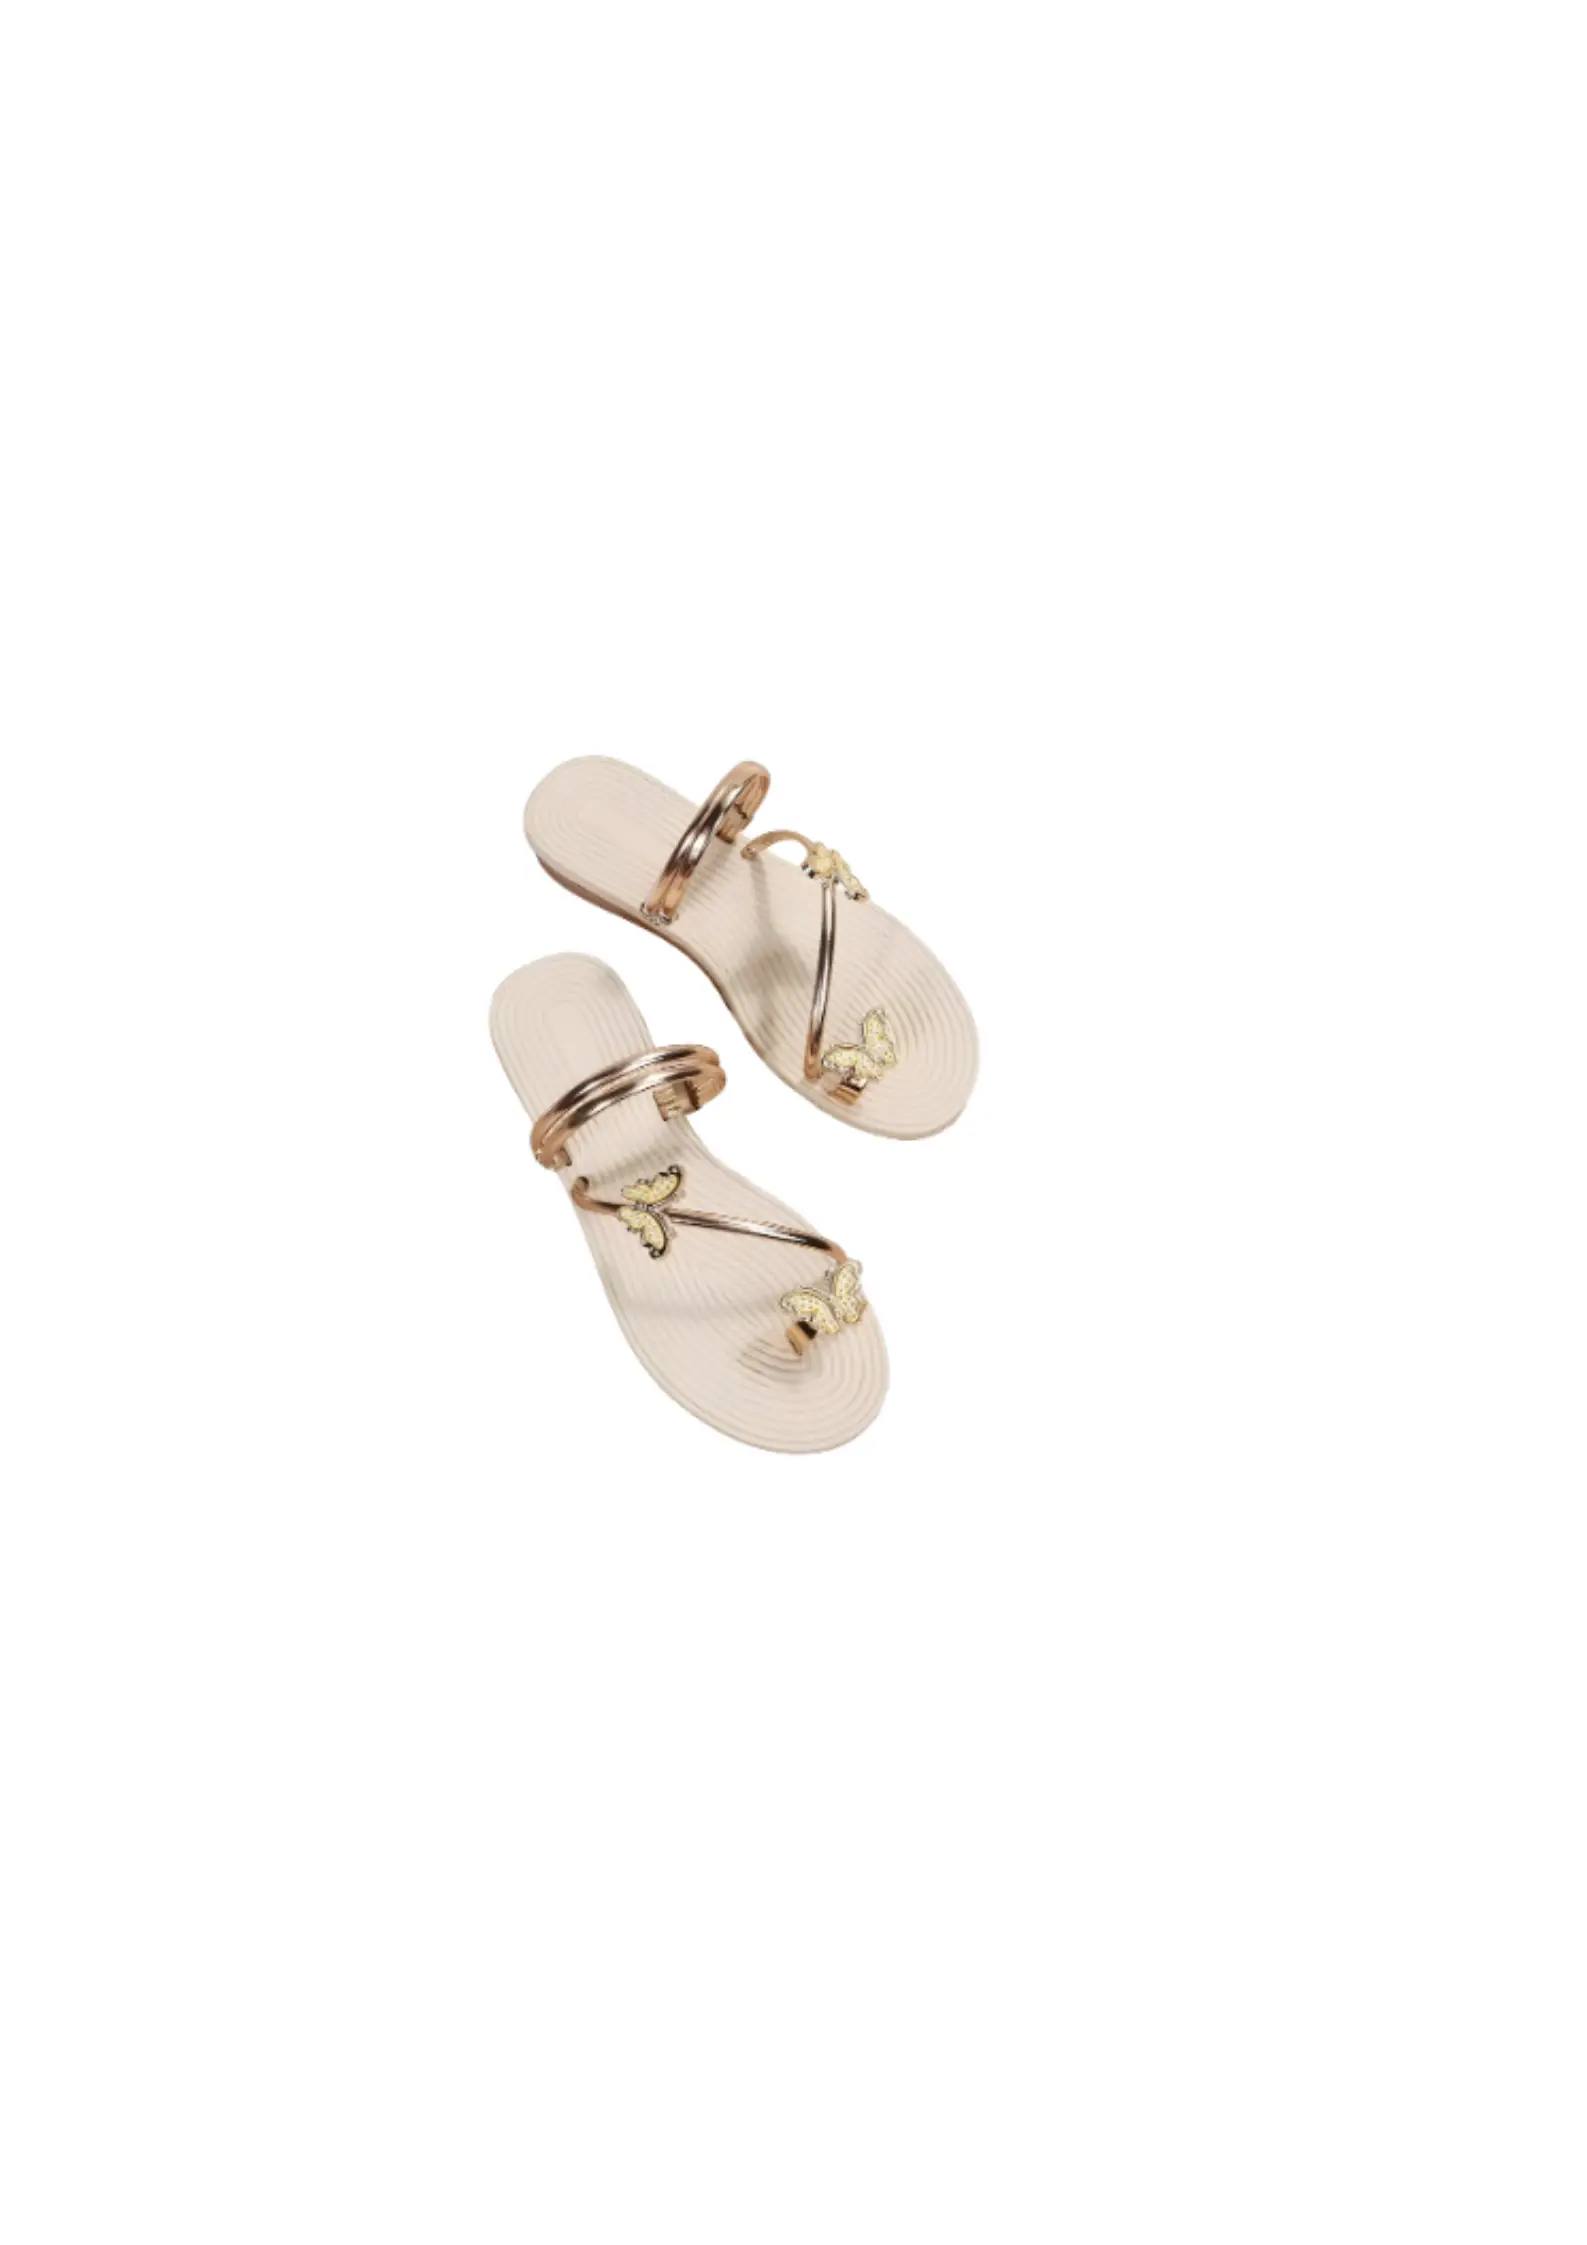 GORGLITTER Women’s Metallic Rhinestone Butterfly Flat Sandals